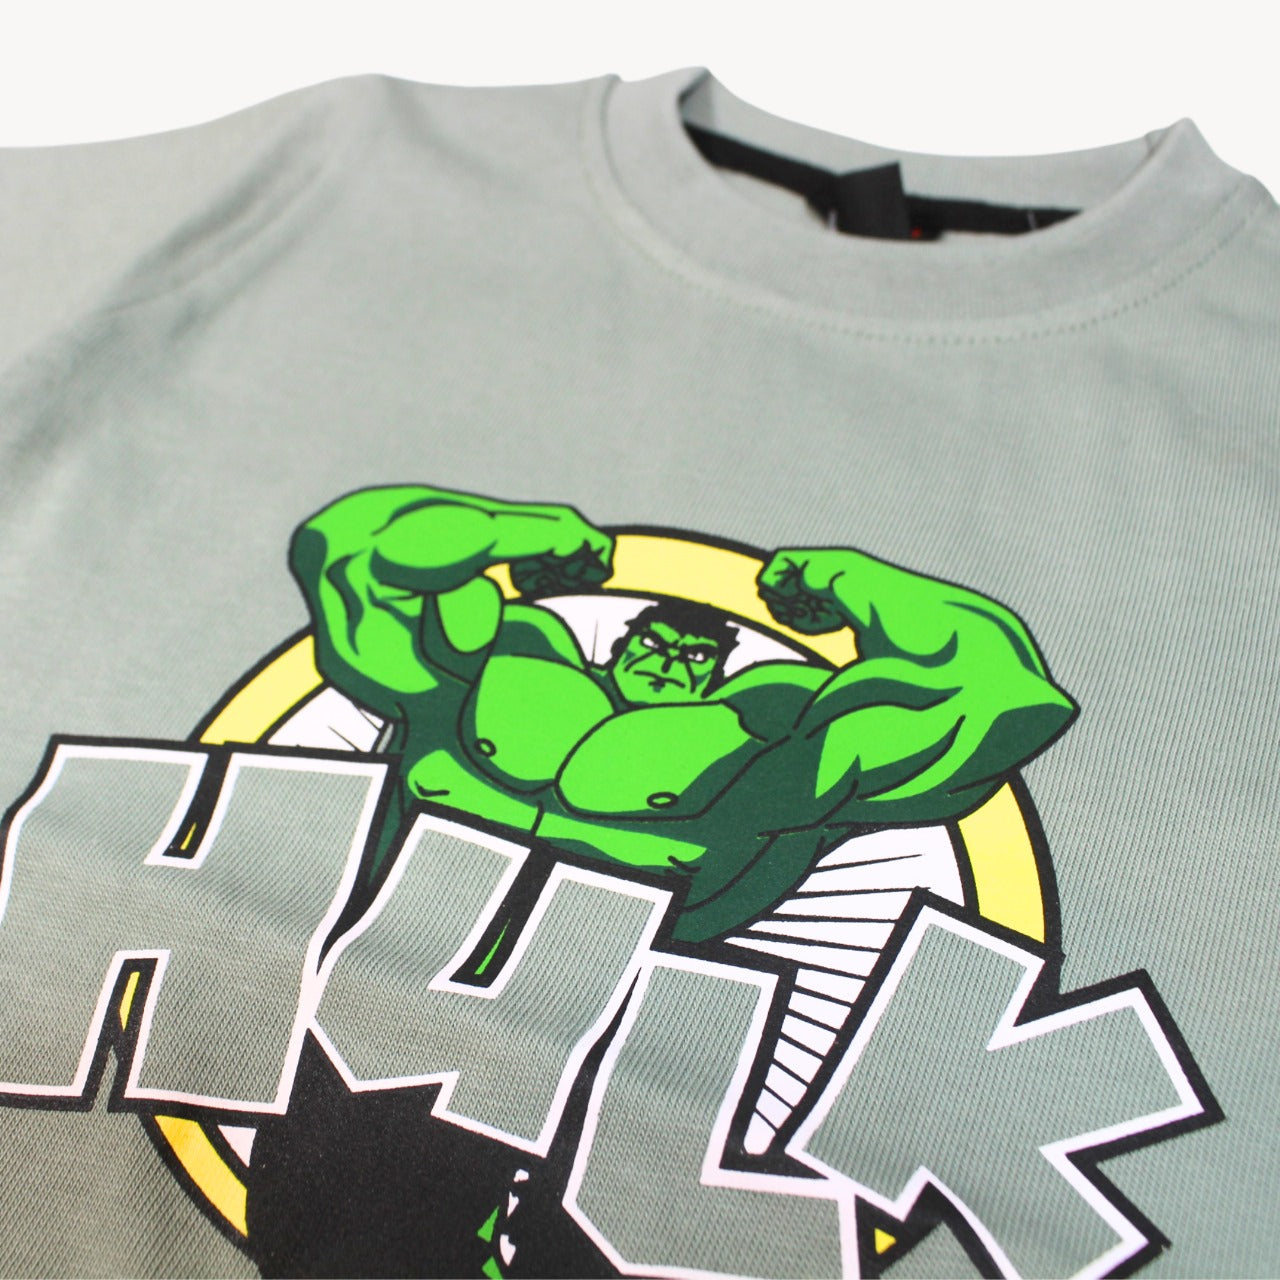 Light Green HULK Printed Cotton T-Shirt